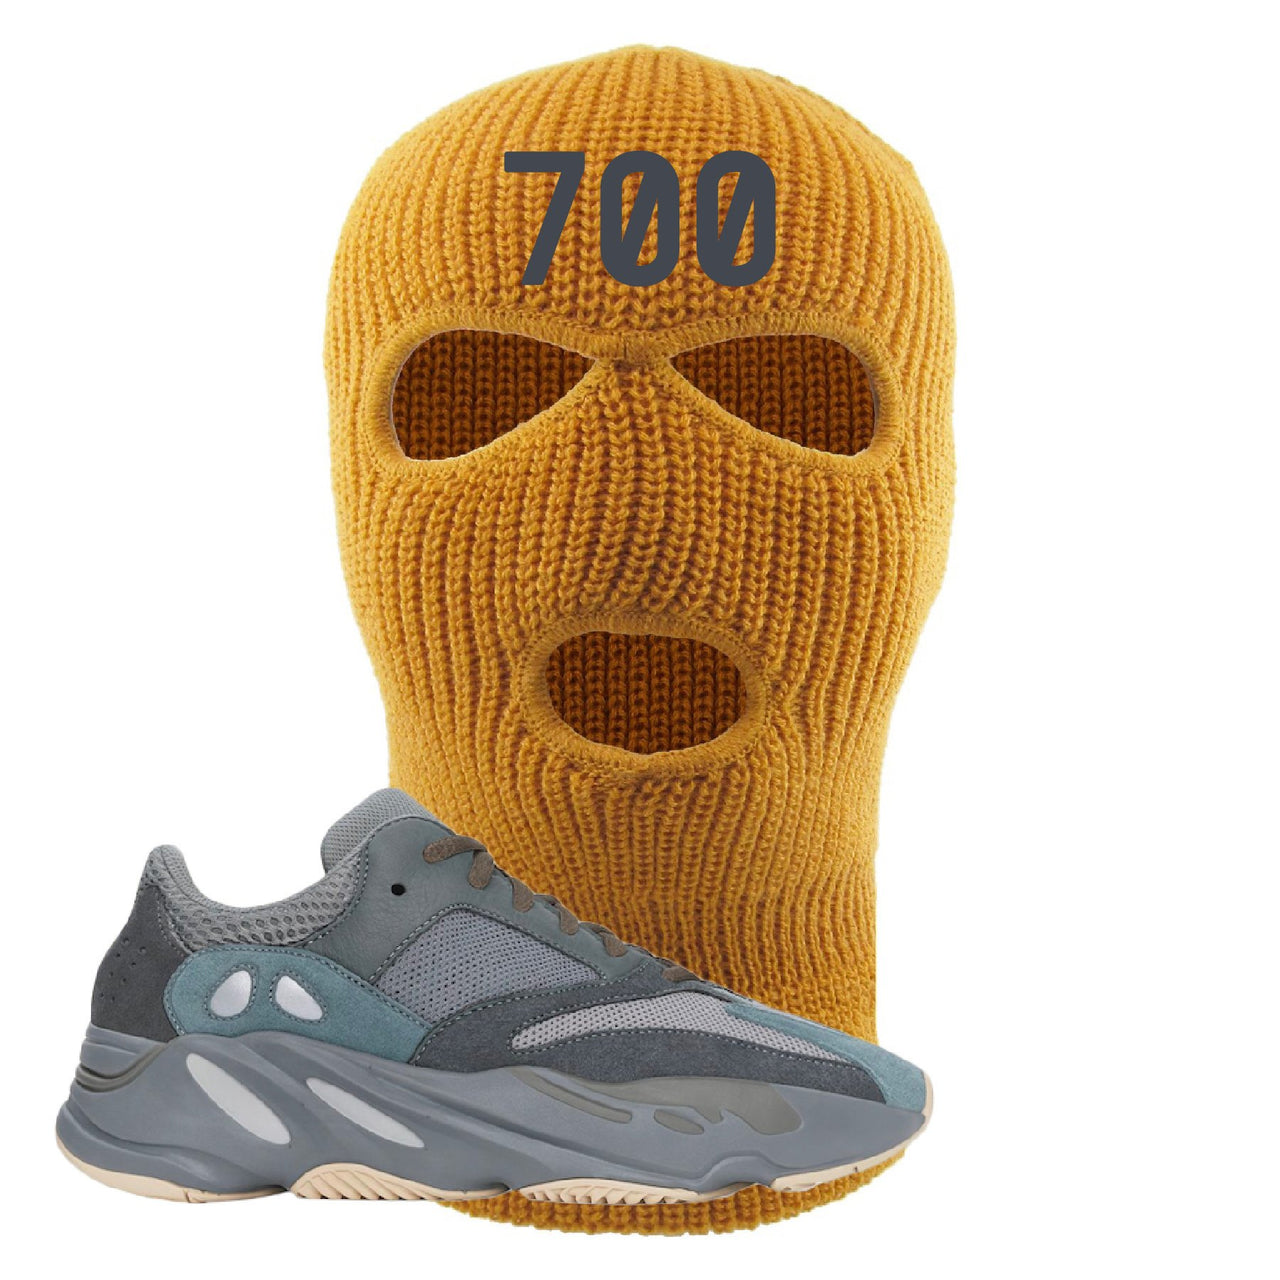 Yeezy Boost 700 Teal Blue 700 Timberland Sneaker Hook Up Ski Mask